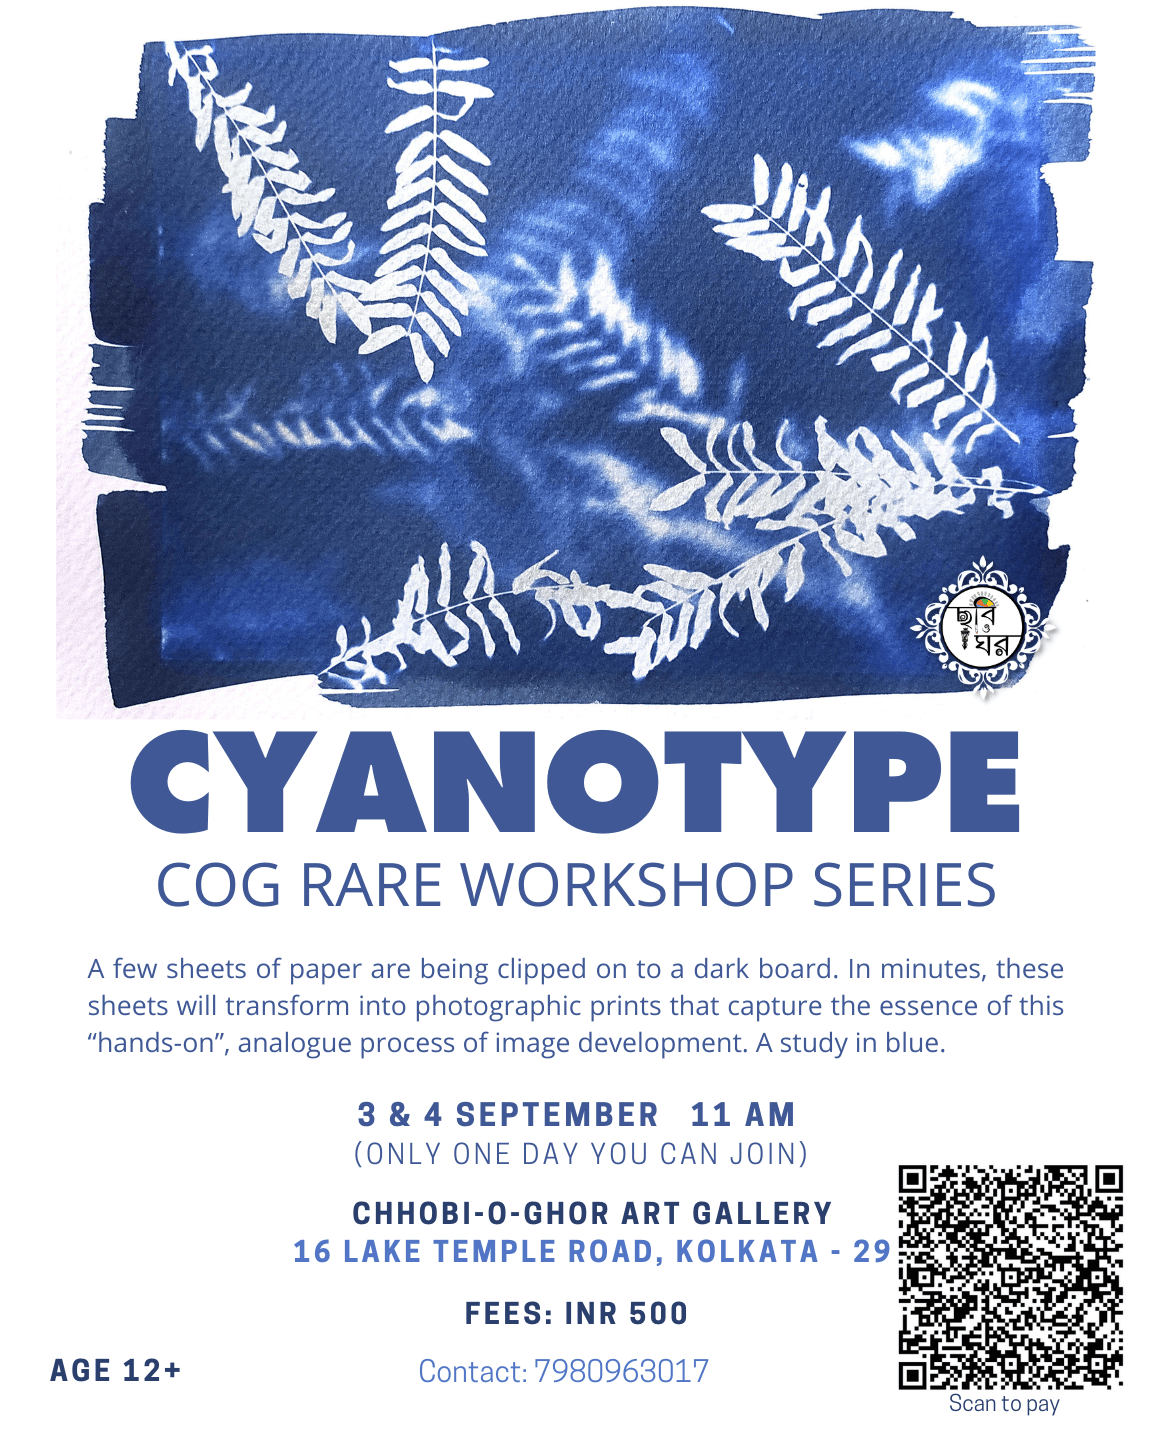 World Cyanotype Day - Sept. 24, 2022